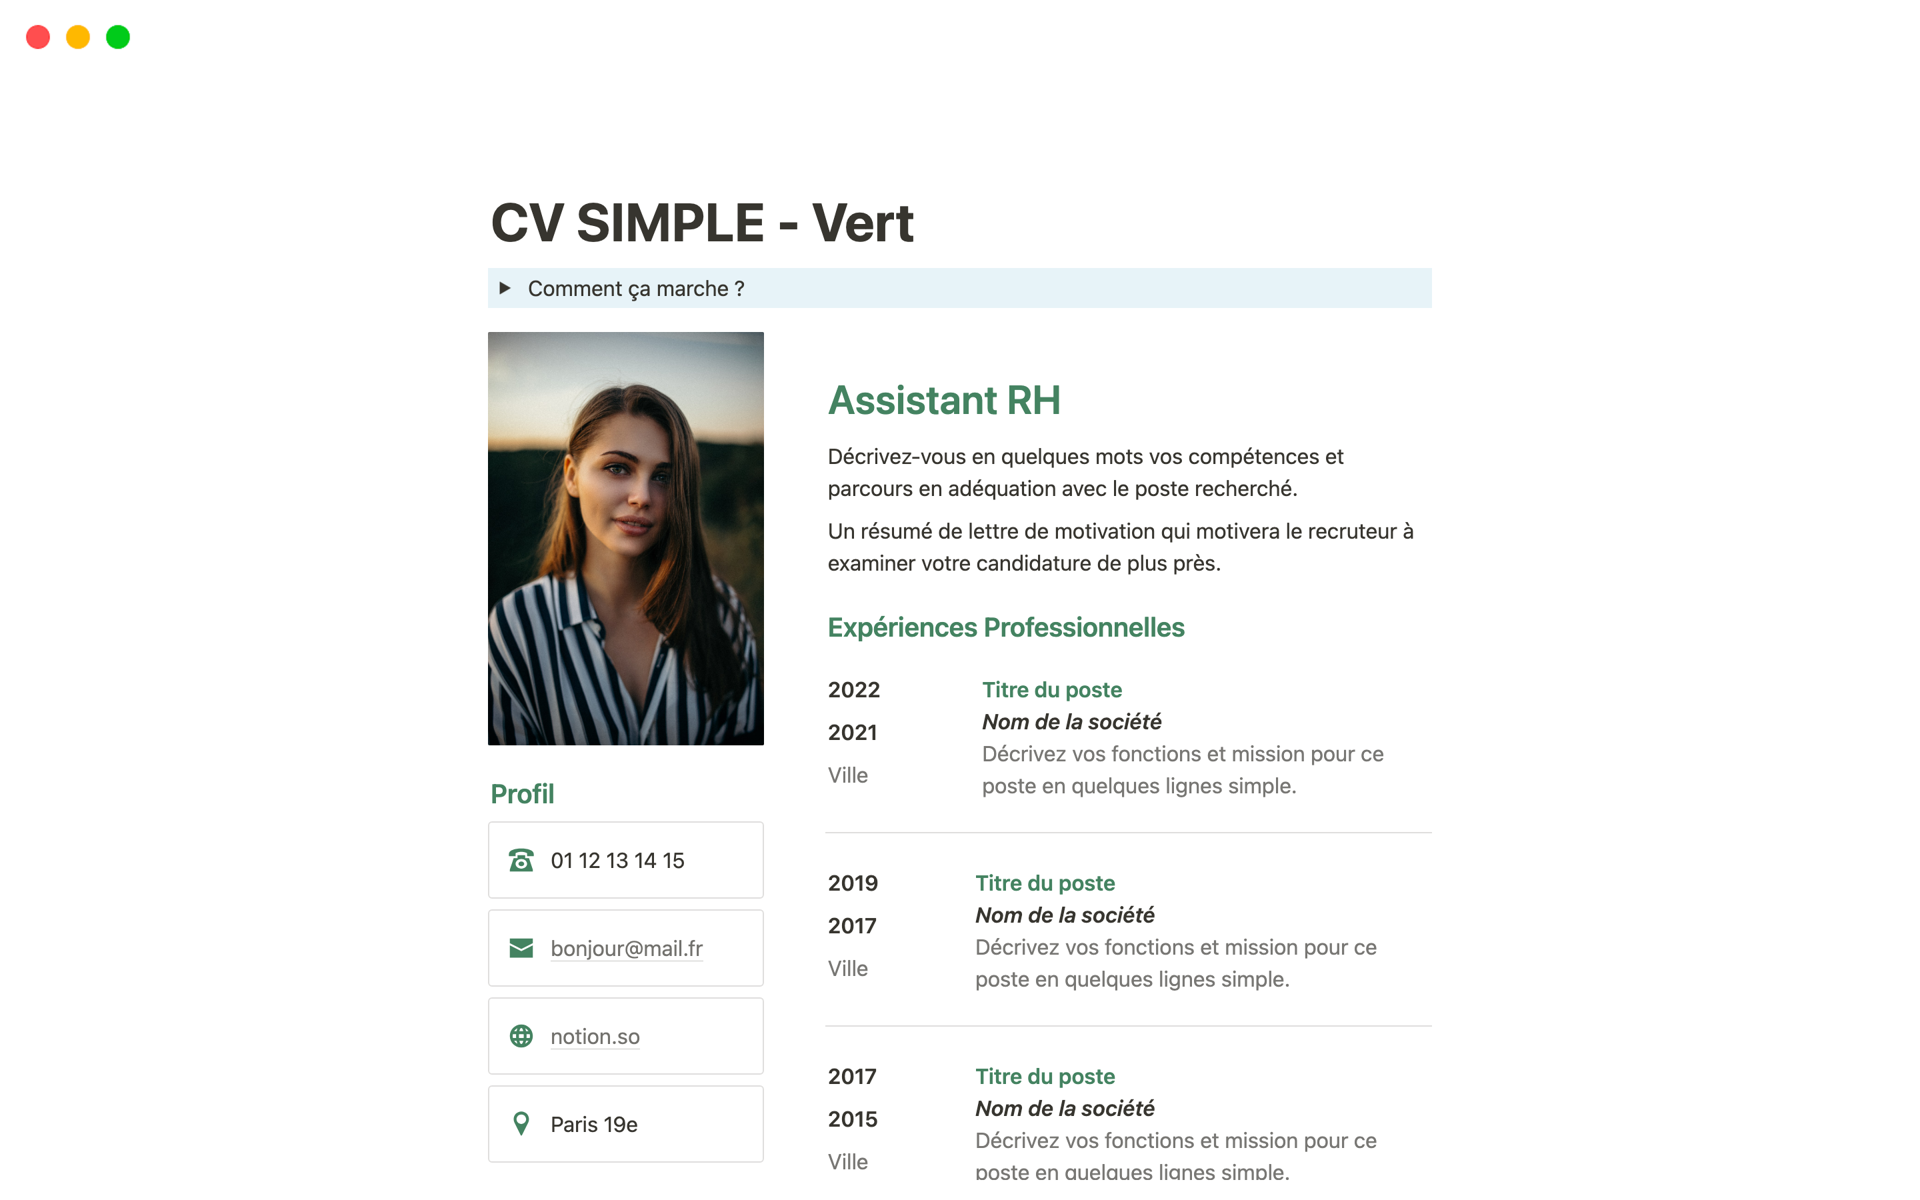 CV simple vert en Françaisのテンプレートのプレビュー